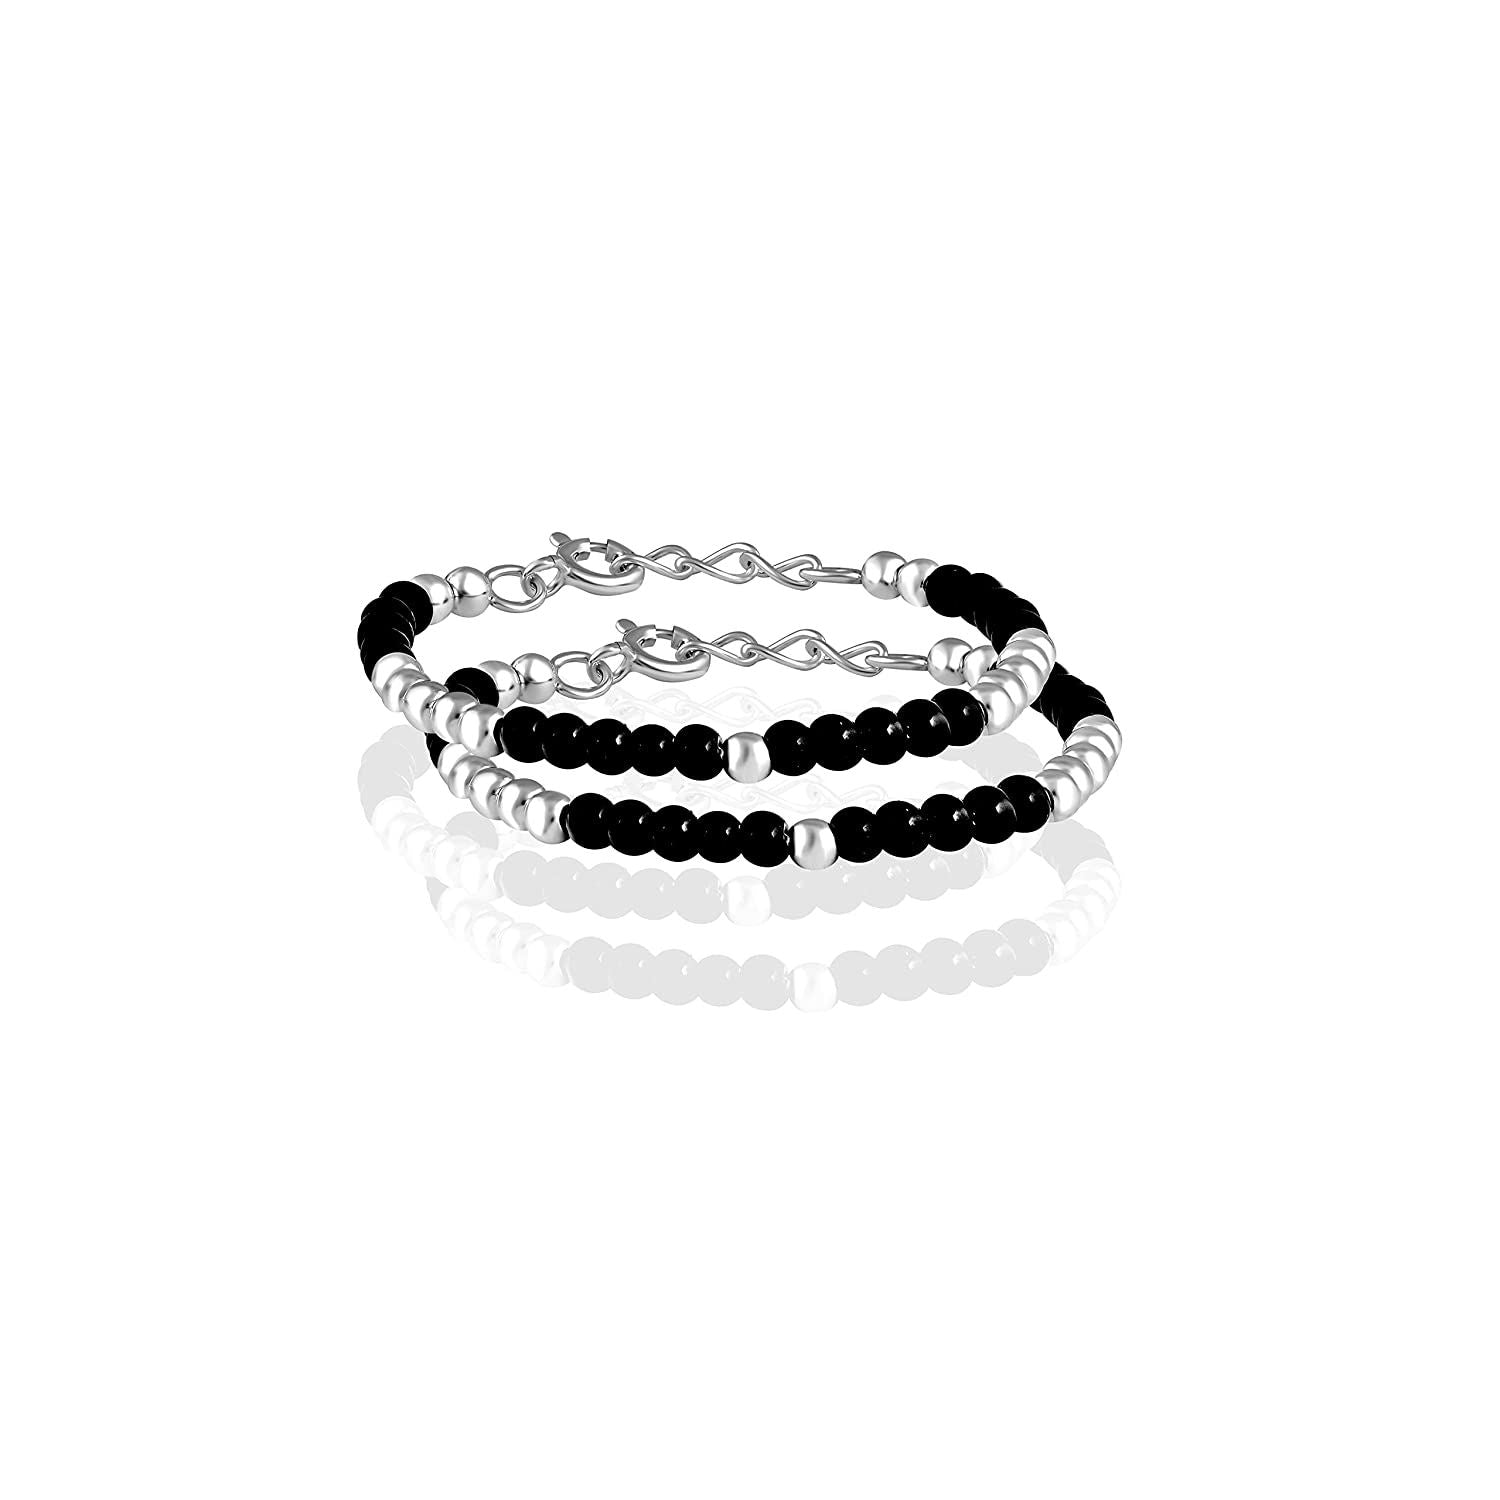 Buy Jai Shri Ram Neev Silver Bead Bracelet in Black Agate Online India |  FOURSEVEN